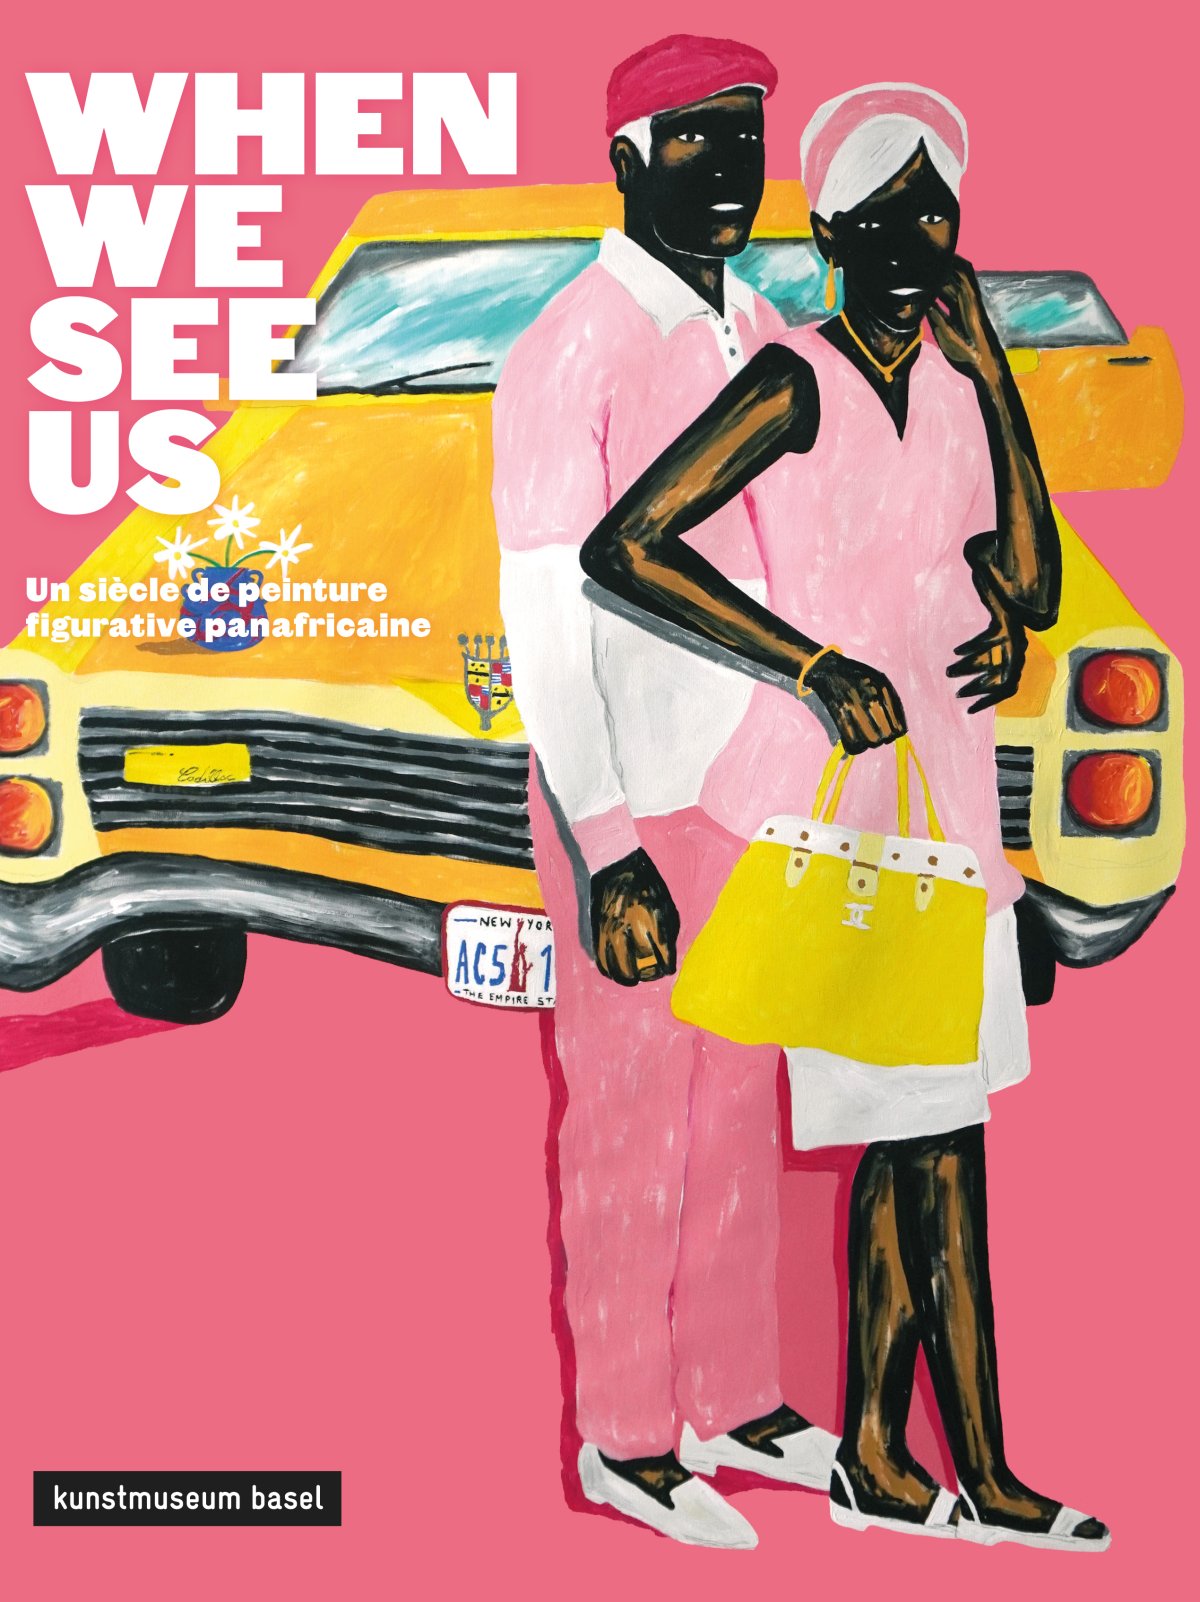 When We See Us. Hundert Jahre panafrikanische figurative Malere